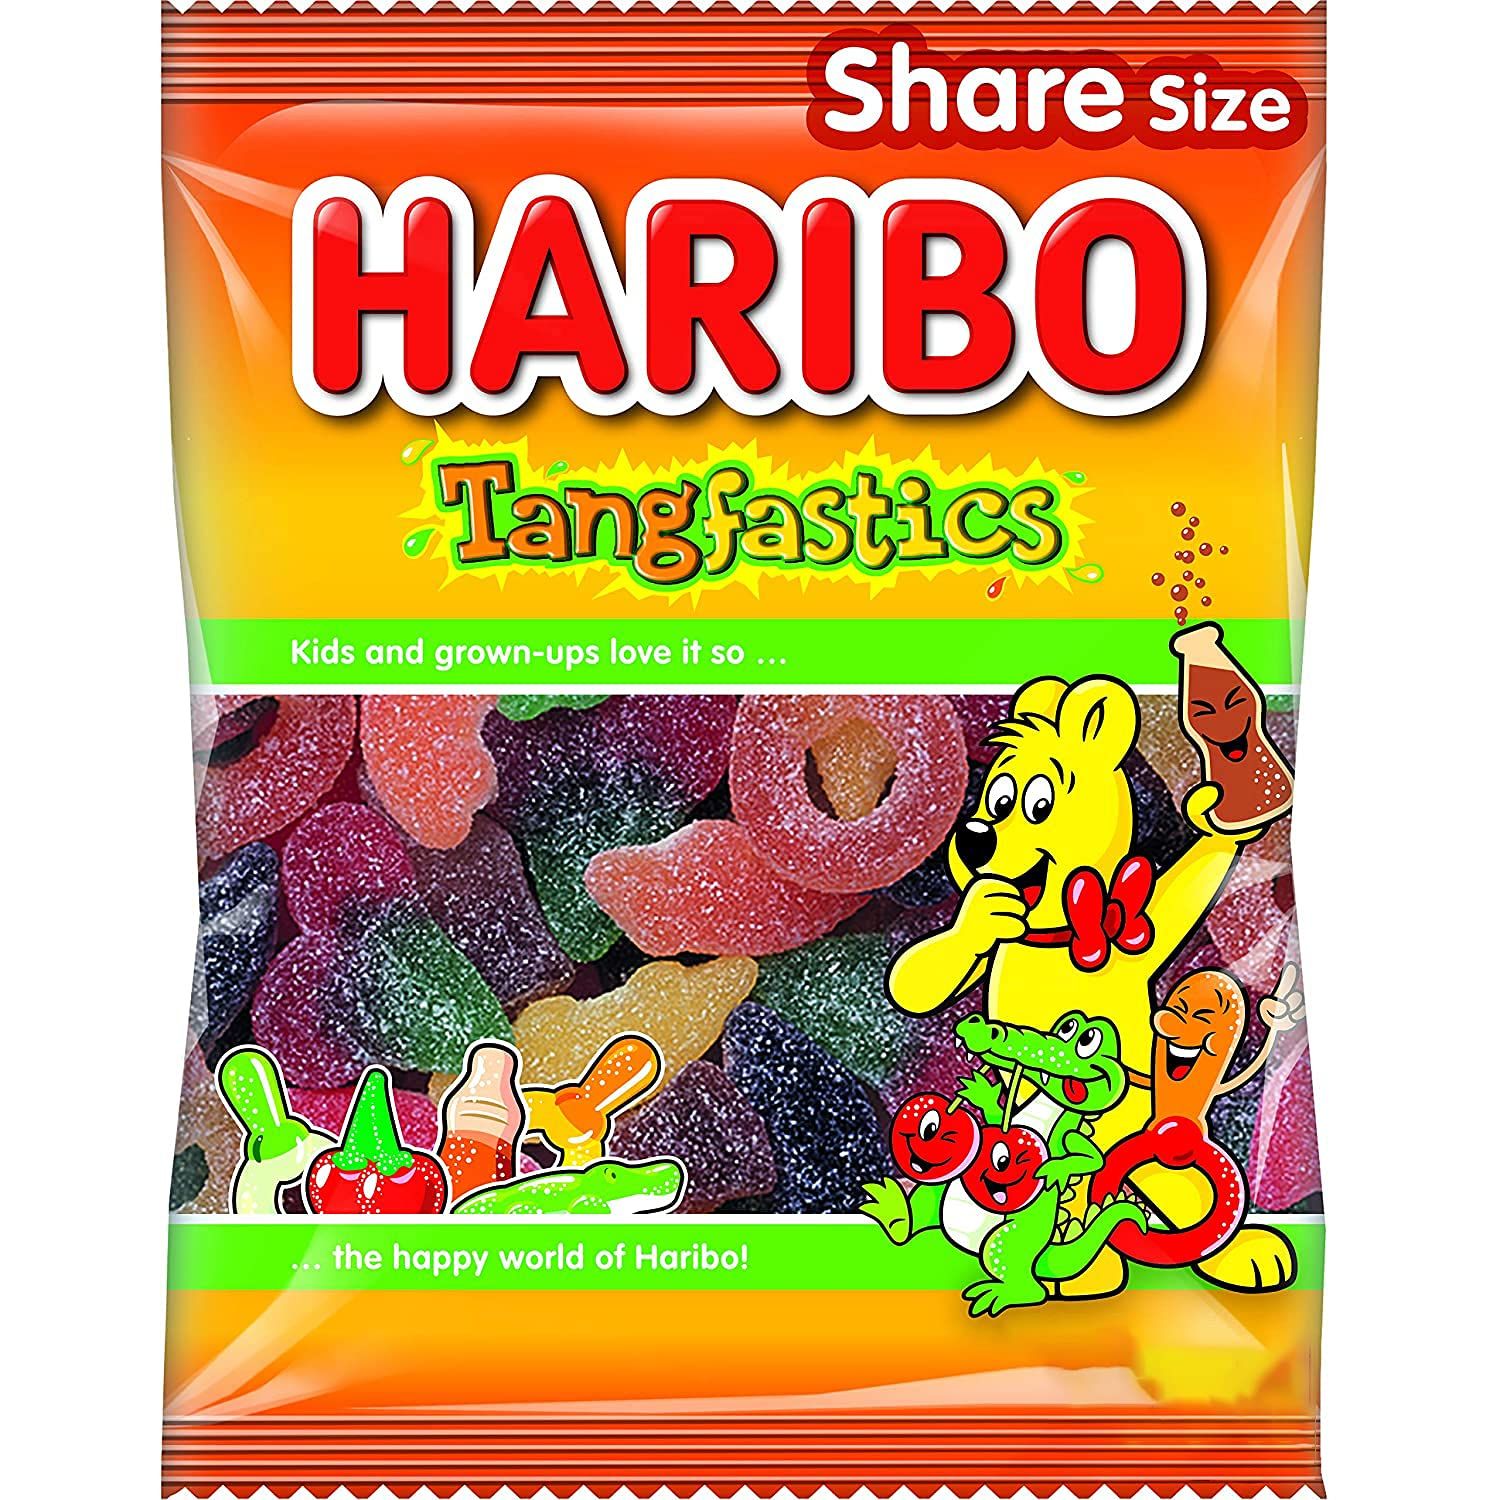 Haribo Tangfastics Jelly Beans Image